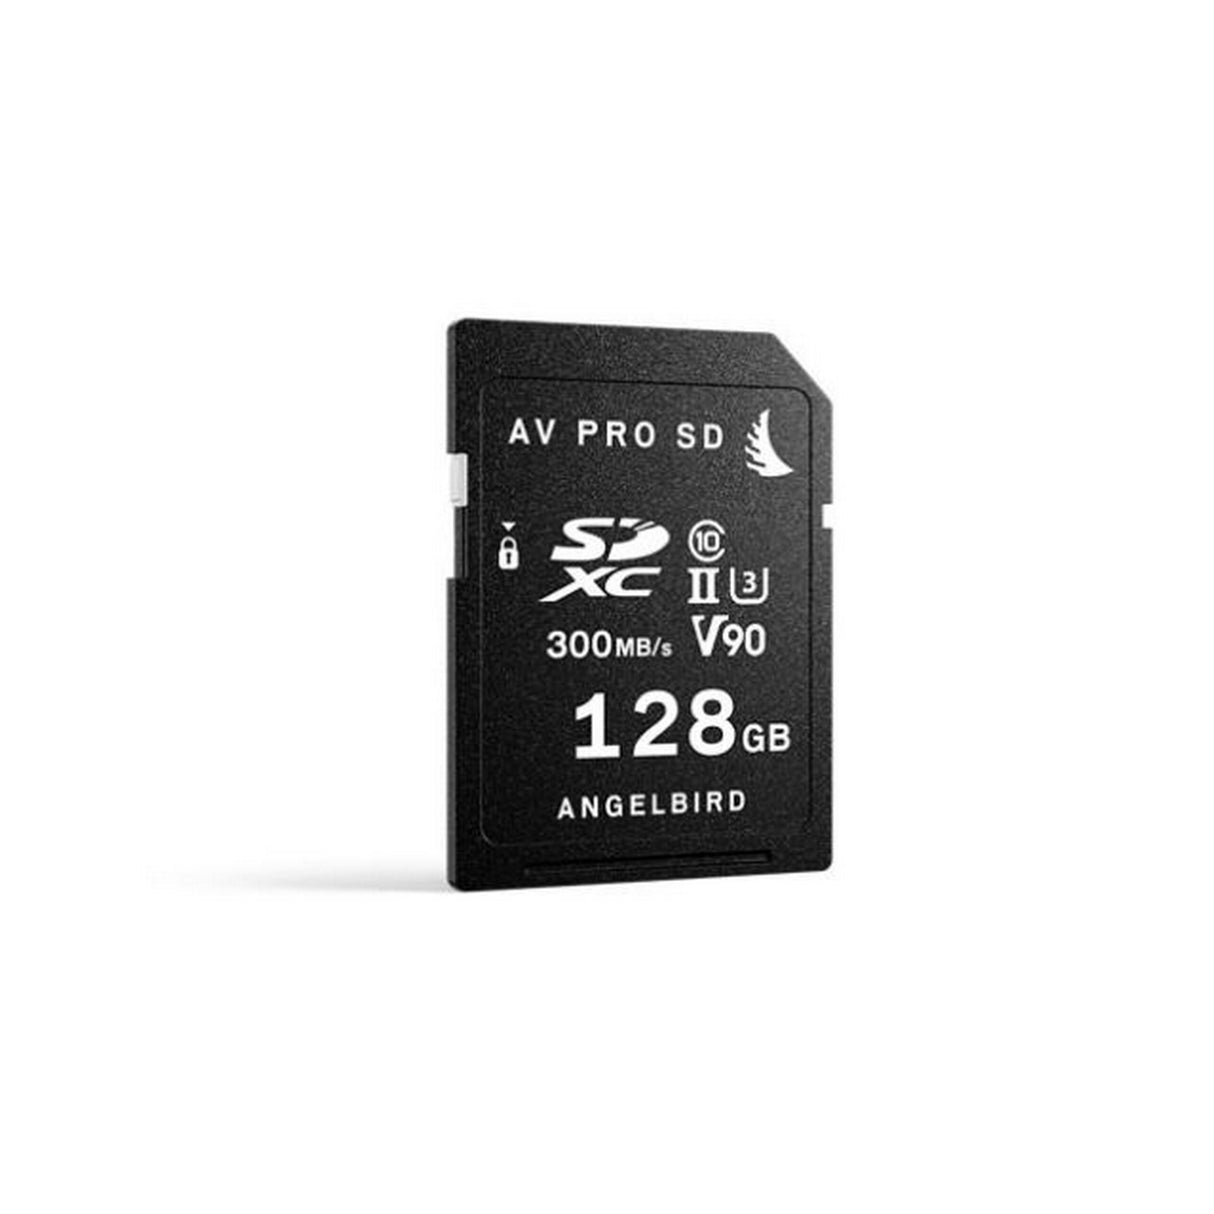 Angelbird AVpro SD MK2 128GB V90 Memory Card (Used)